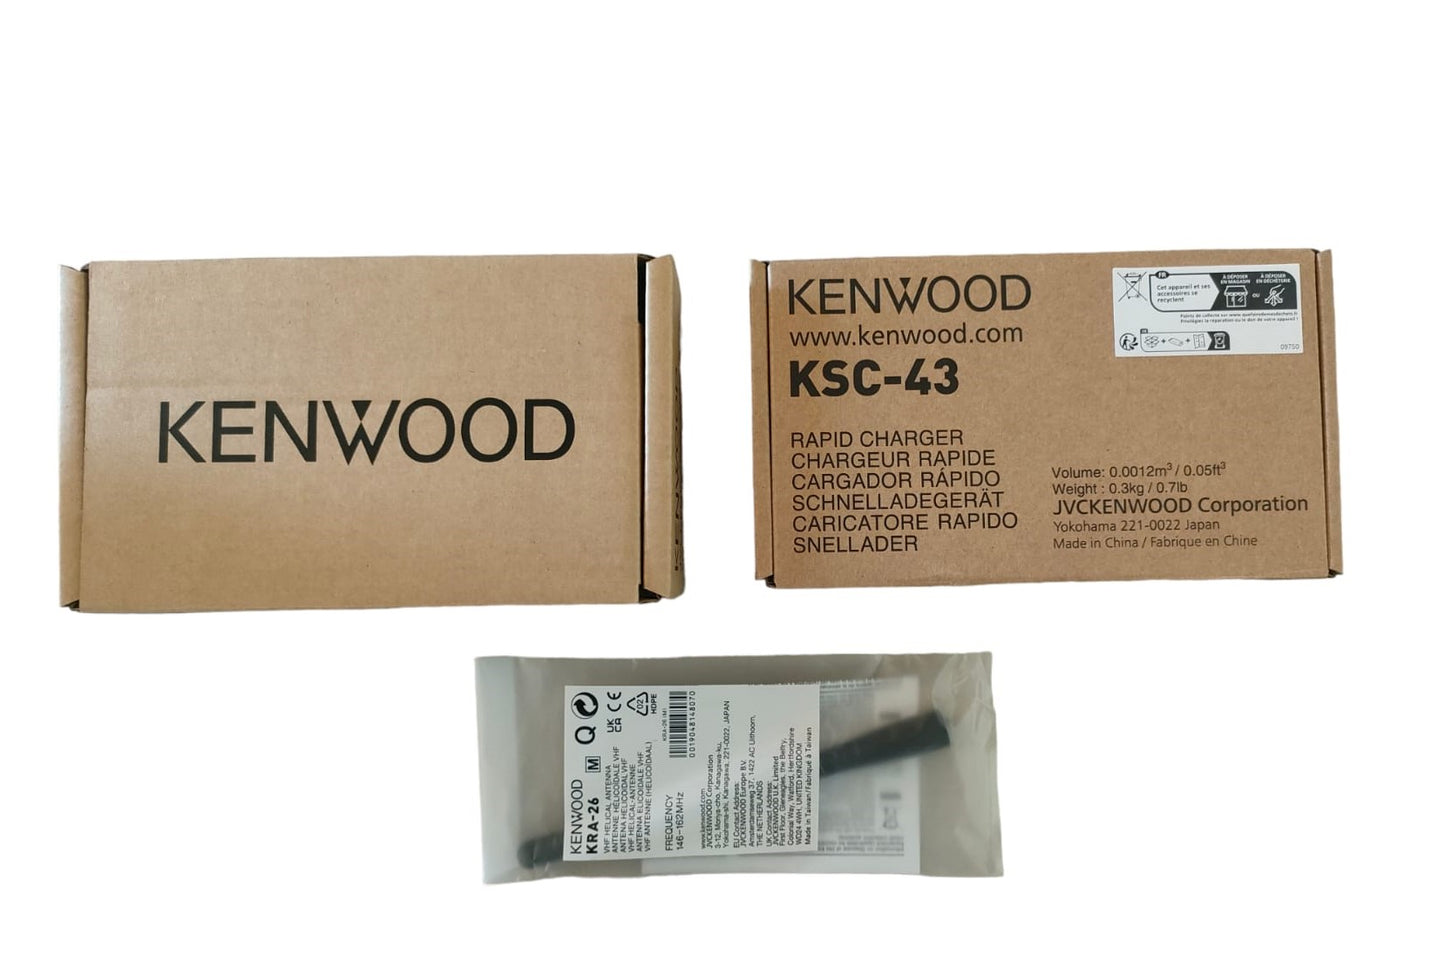 Kenwood NX1200DE3 Radio - Professional Digital Two-Way Communication Device